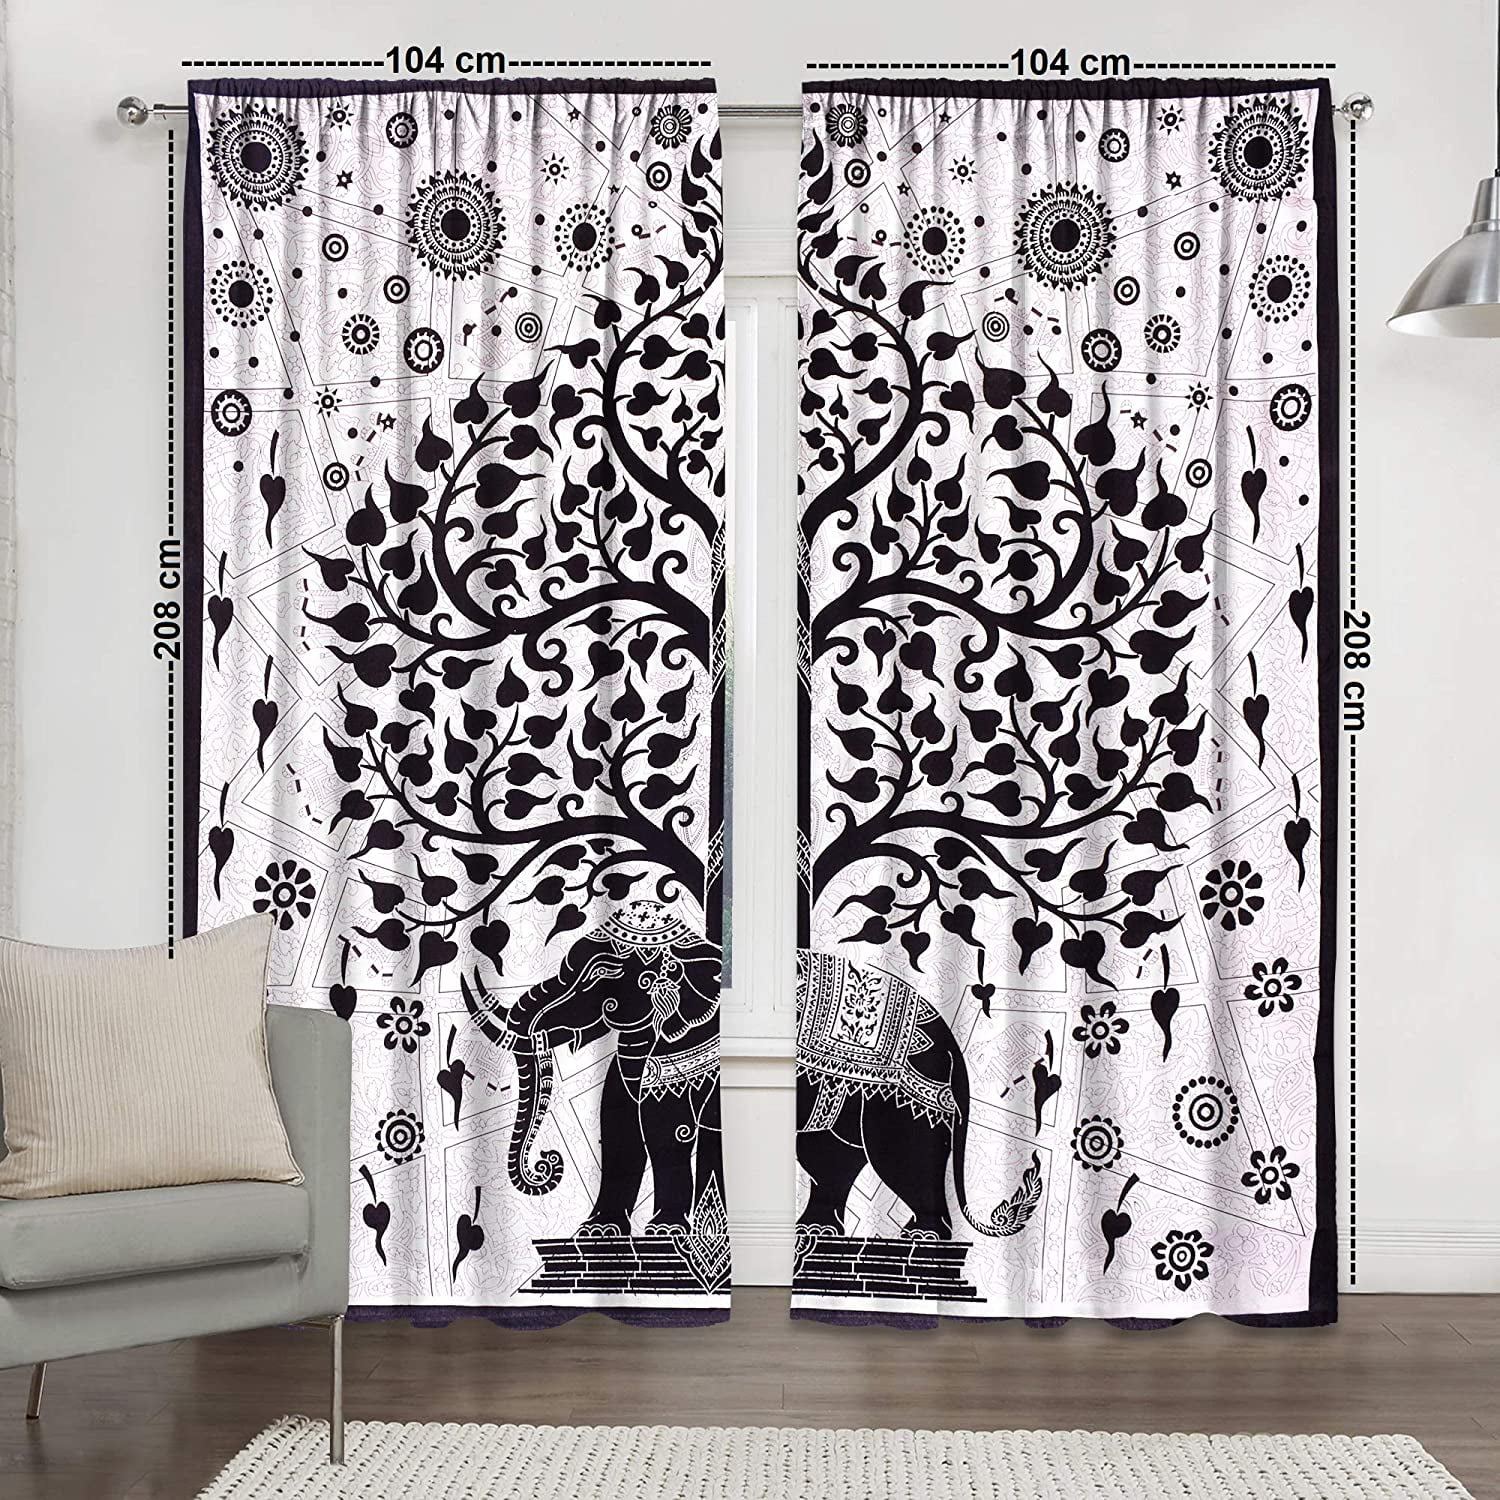 Decorative Indian Mandala Curtains Cotton Drape Panel Scarf Window/Door Valance 